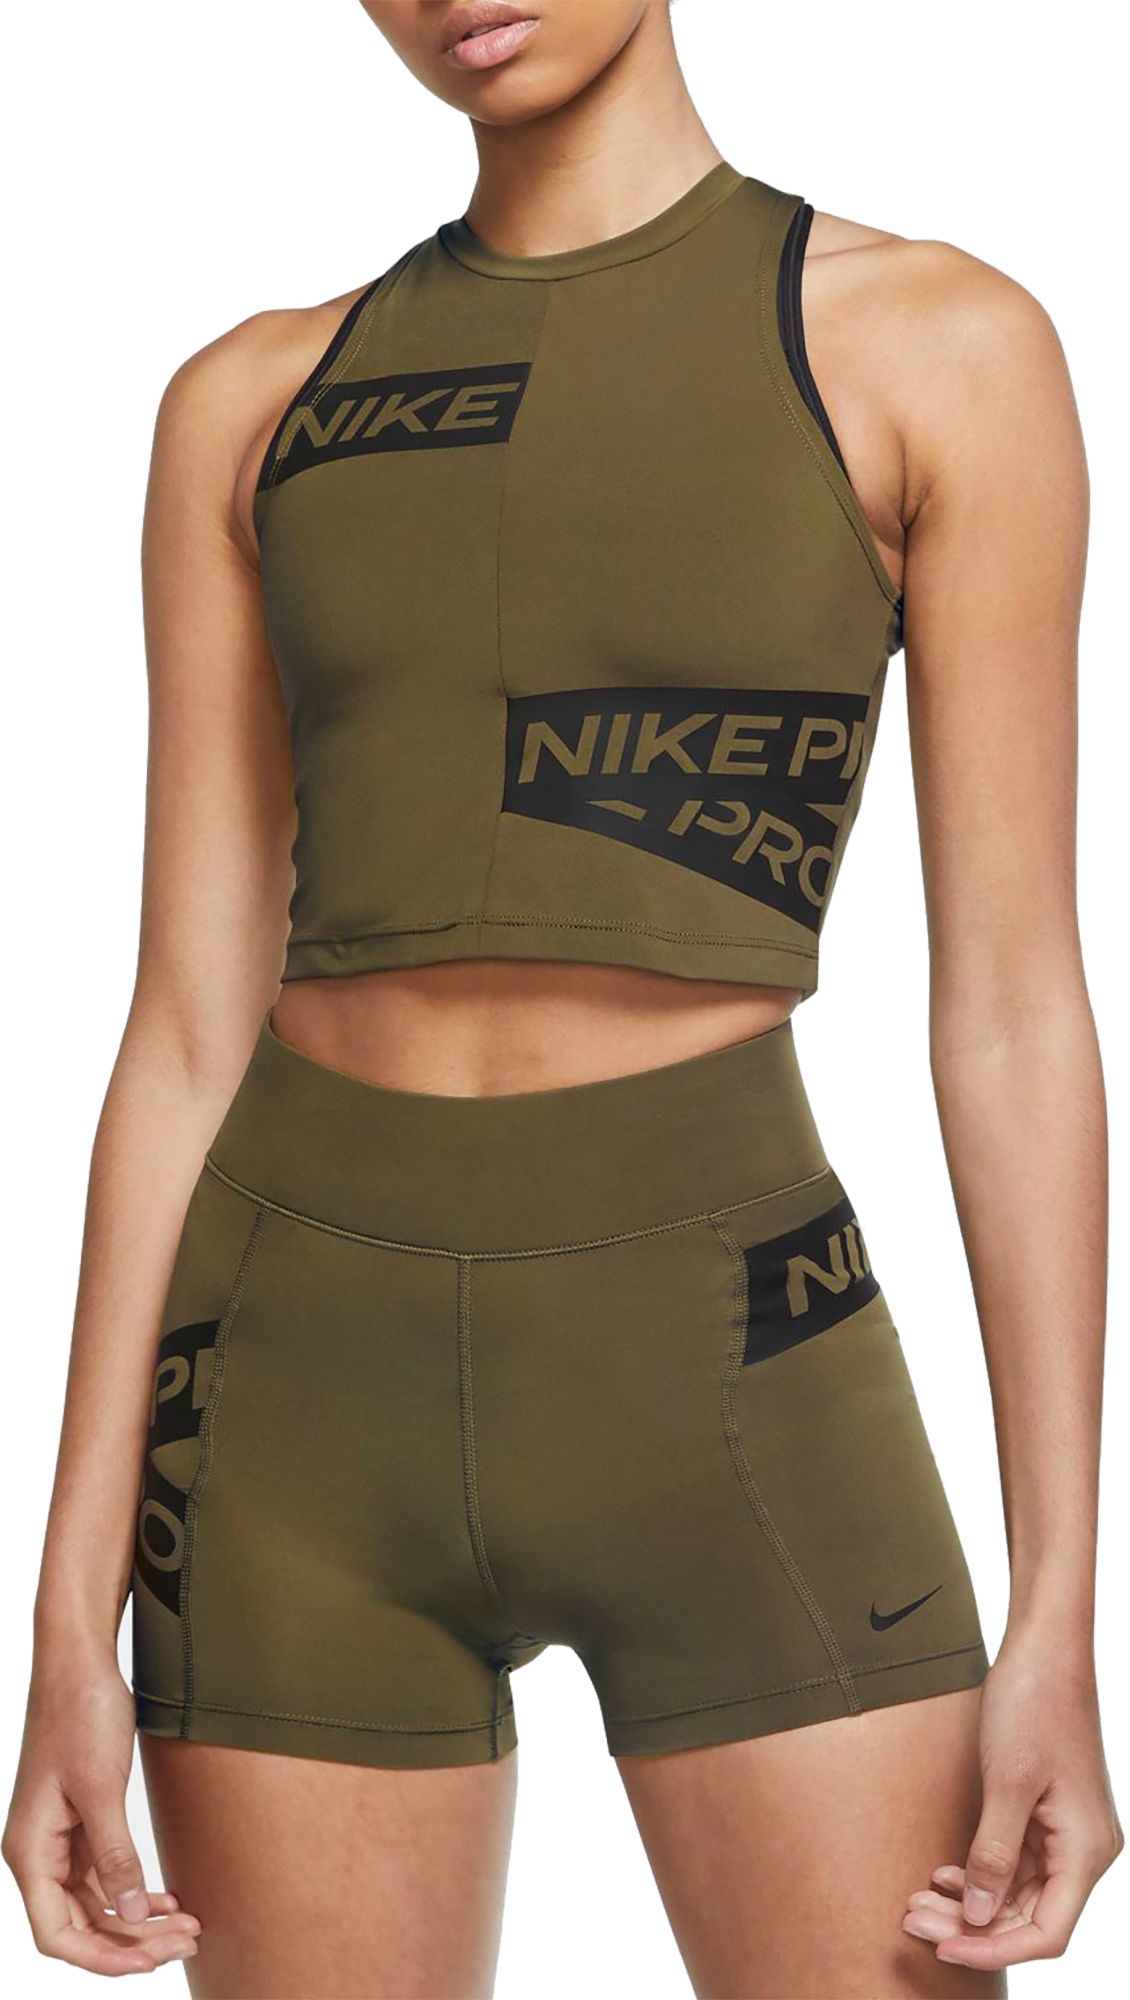 nike pro women's graphic tank top